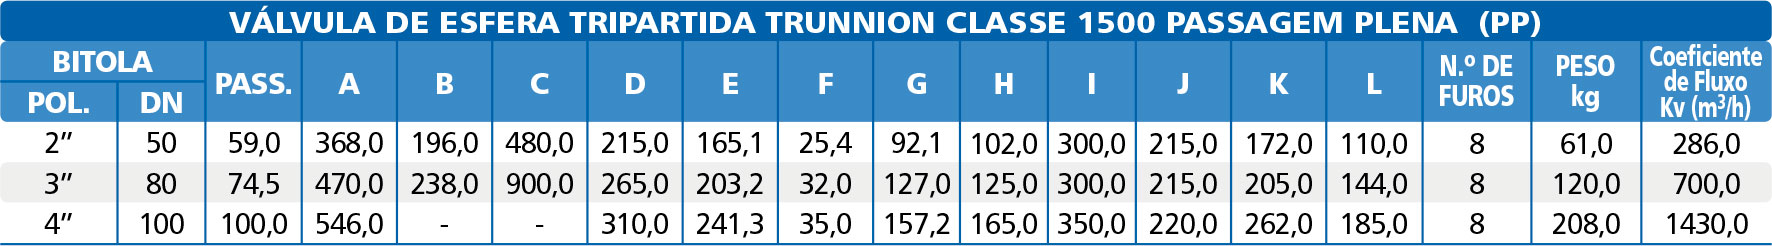 Valvula-de-Esfera-Tripartida-Trunnion-Classes-1500-tabela